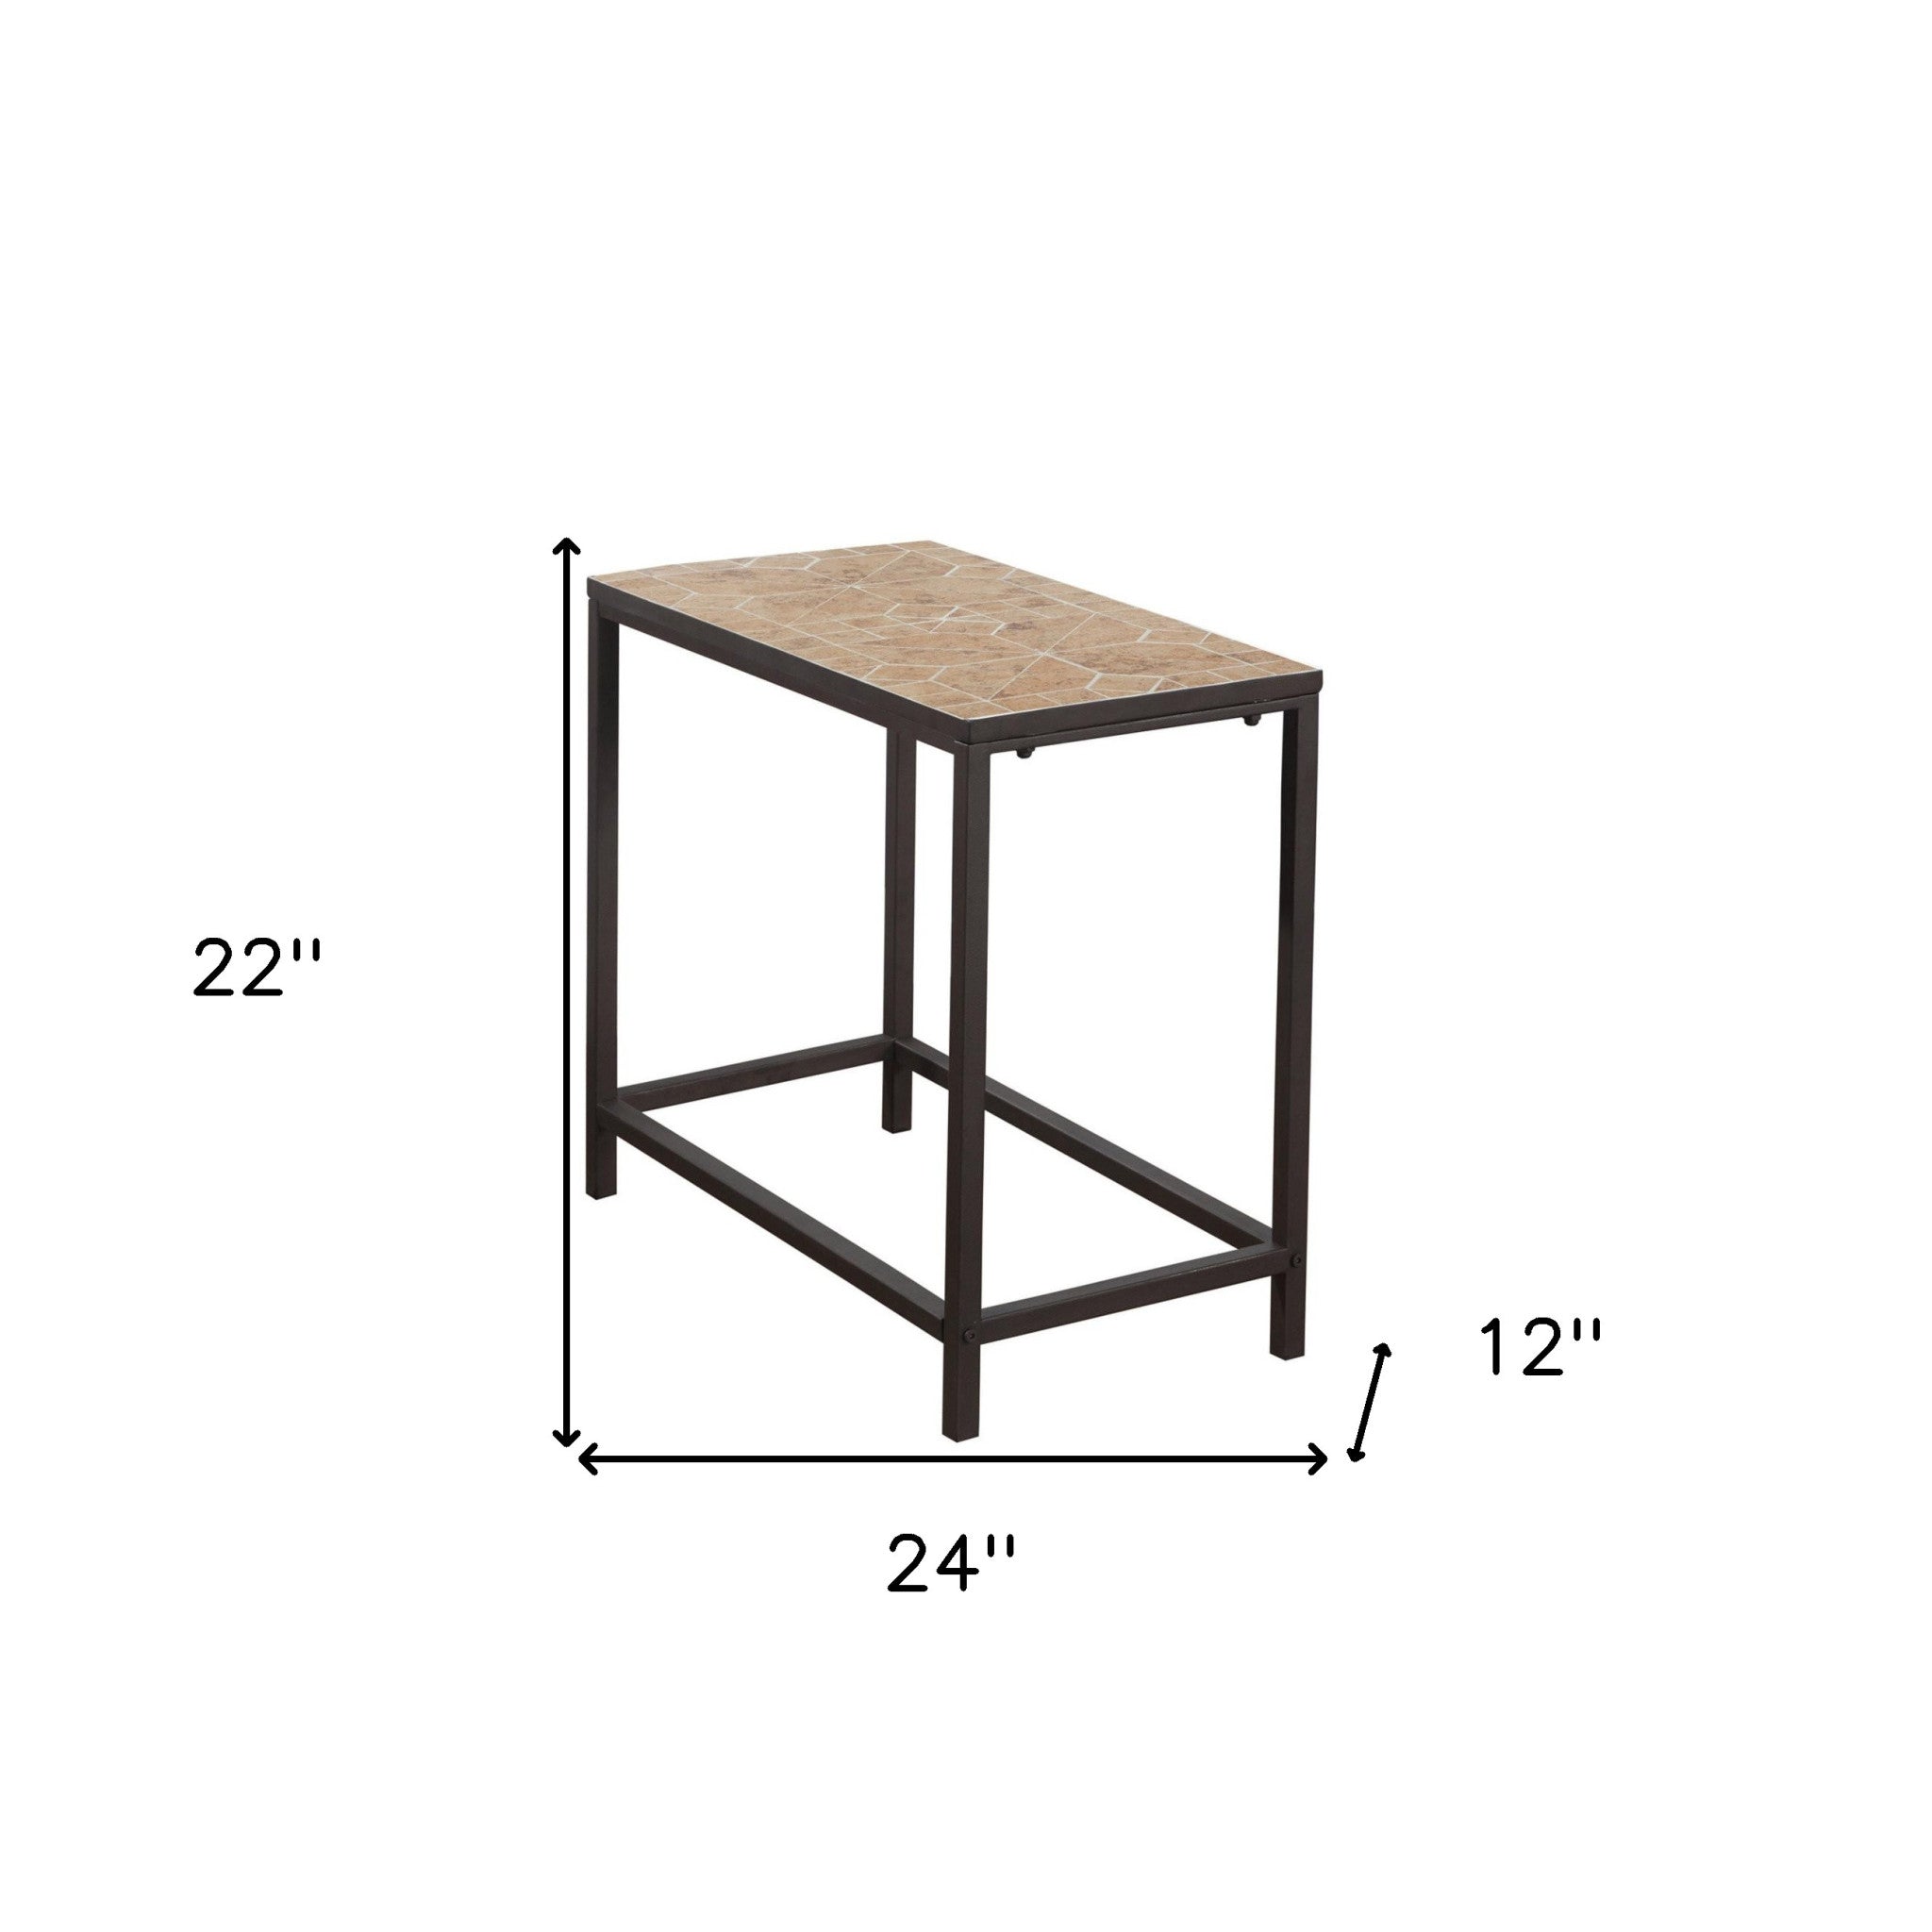 22" Brown Tile End Table